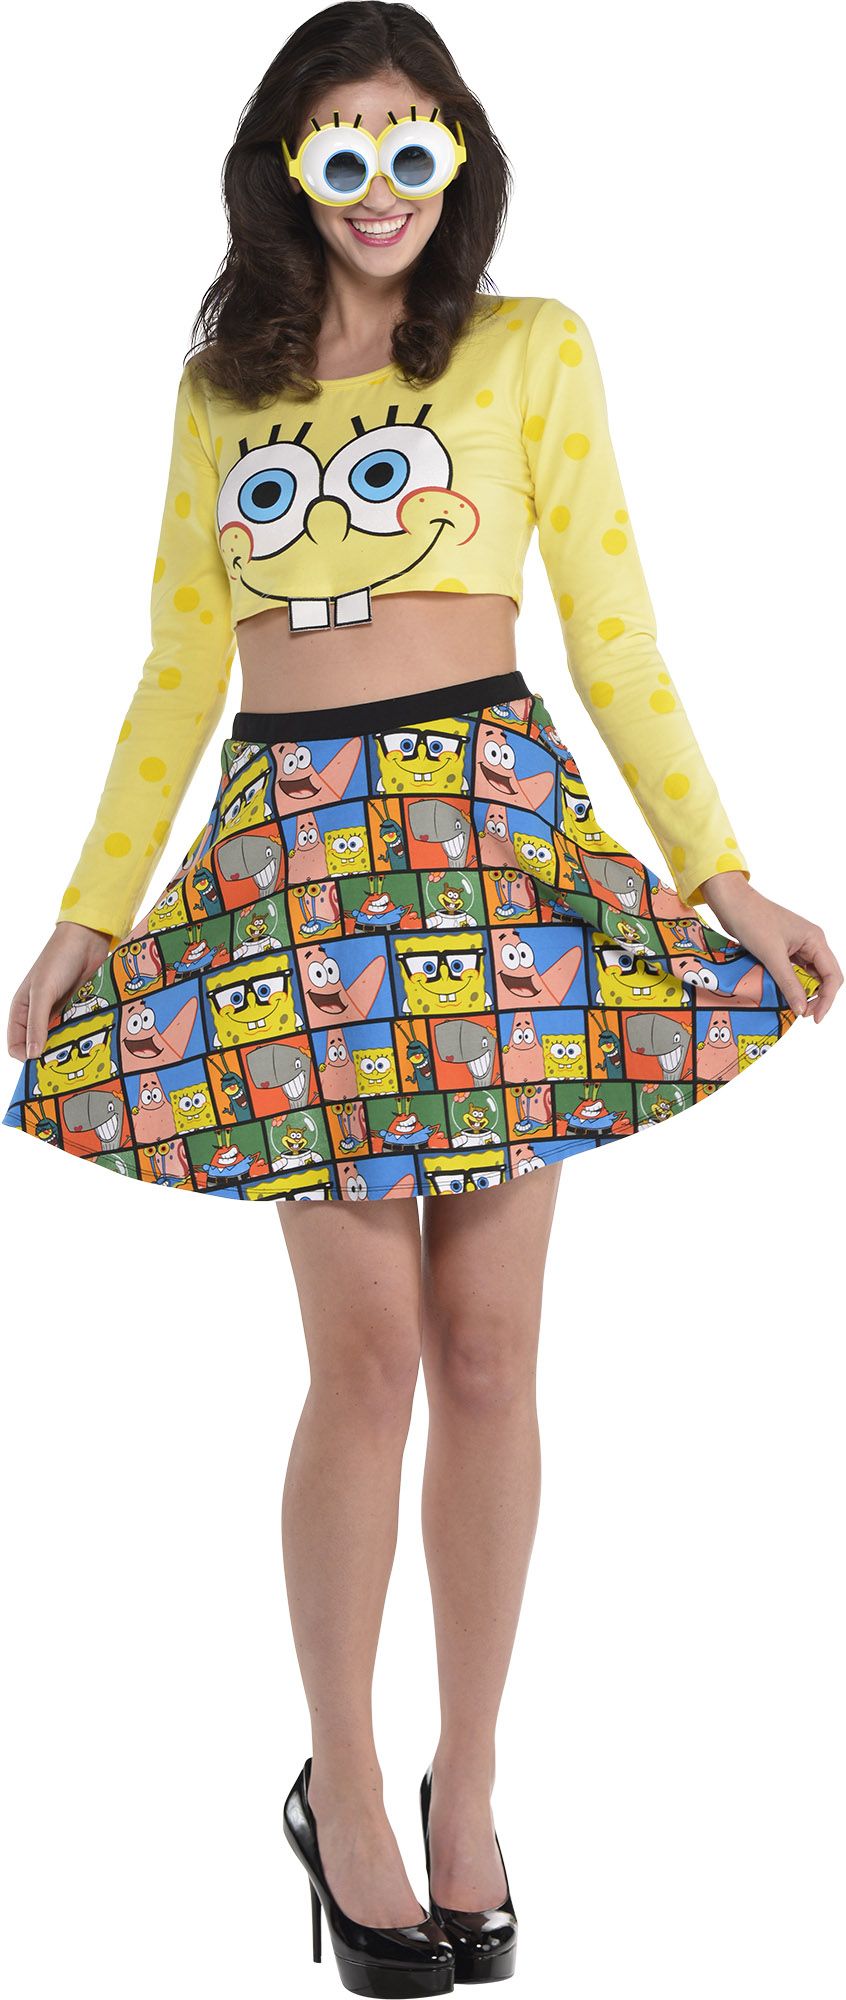 Create Your Own Women's SpongeBob Costume Accessories - Party City